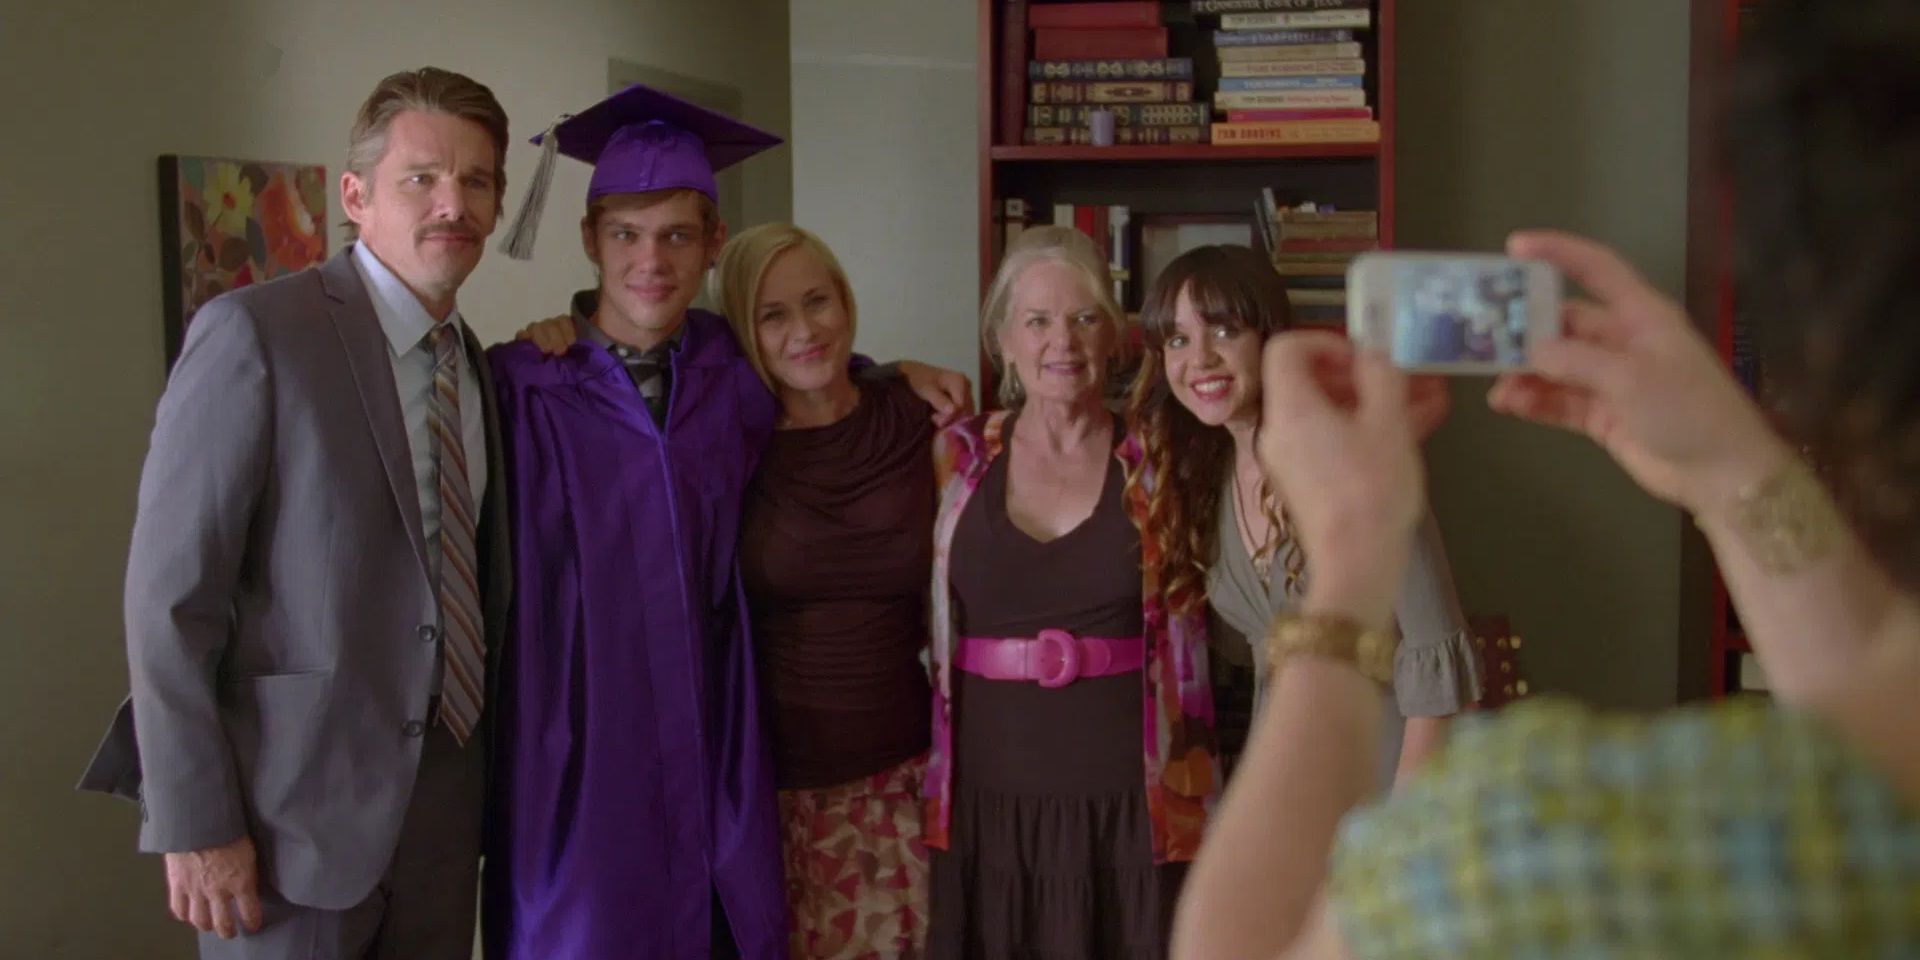 The Evans family on graduation day in Boyhood